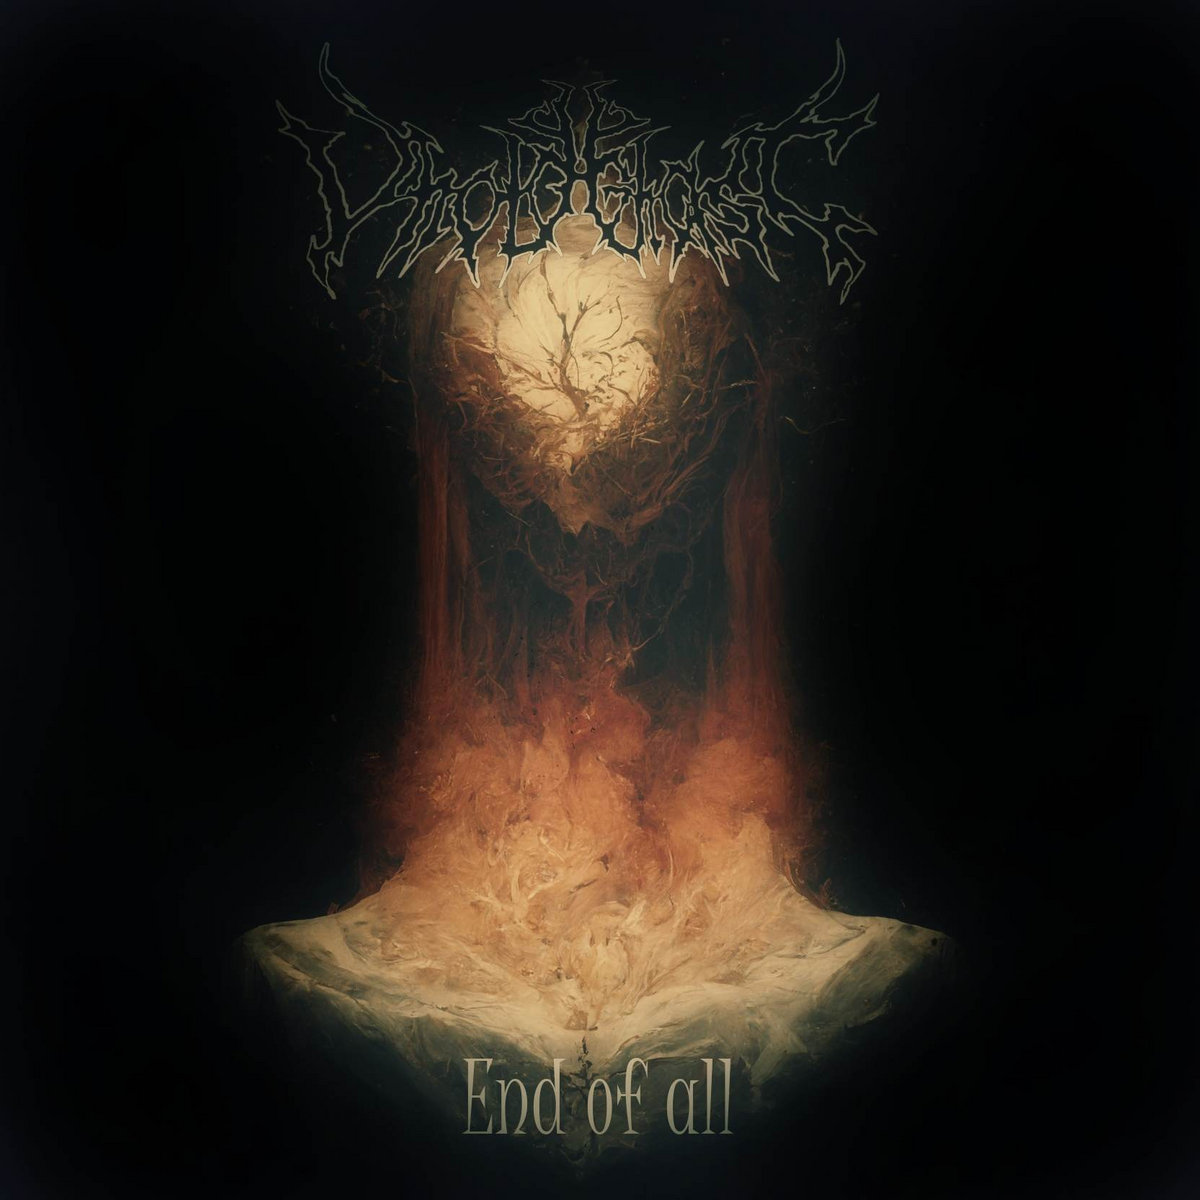 Vholdghast - End of All (EP)
Blackened Death Metal from Sundsvall, Sweden
Release date: October 15th, 2023 via @IBDCORPLABEL 

ironbloodanddeath.bandcamp.com/album/end-of-a…

#Vholdghast #swedishdeathmetal #deathmetal
#deathmetalband #deathblackmetal #newep2023 
#blackdeathmetal #blackeneddeathmetal